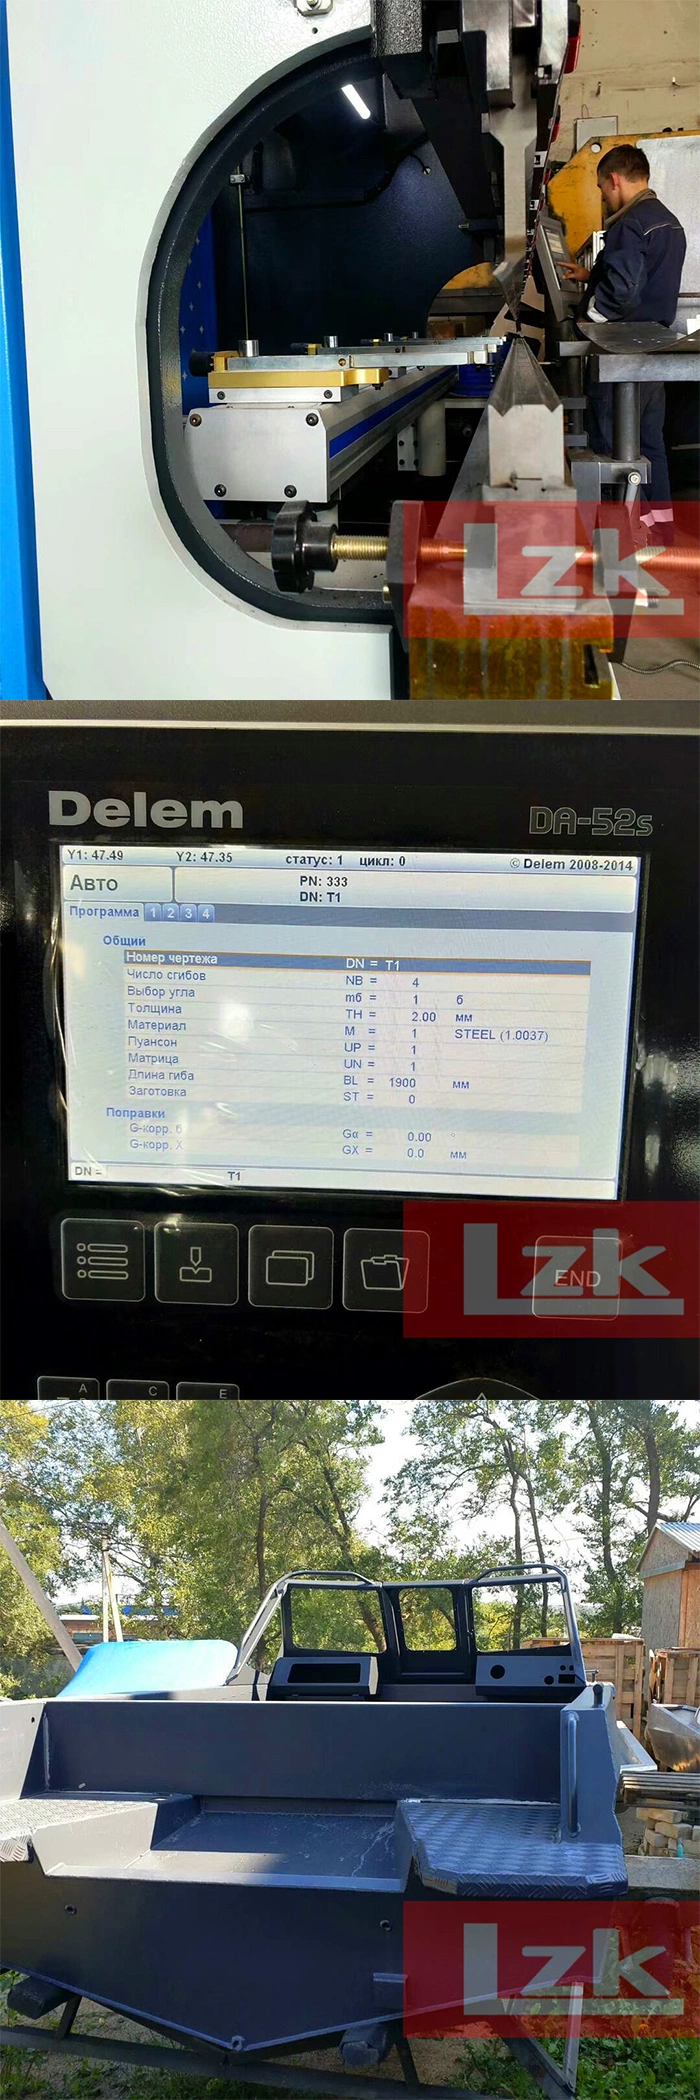 100tonx3000meter CNC Hydraulic Sheet Bending Press